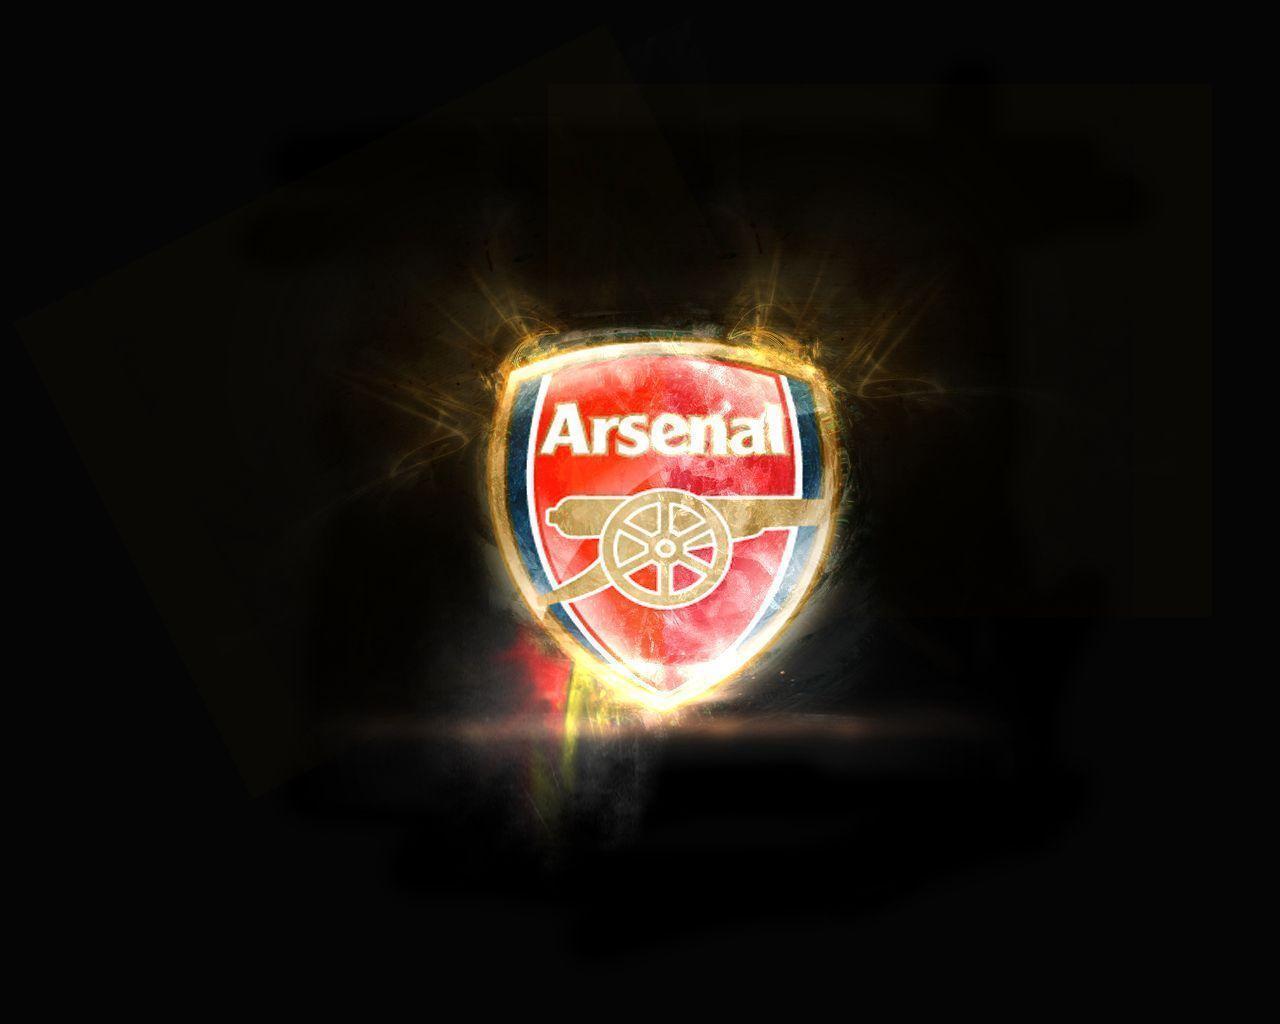 Arsenal 86390 HD Wallpaper Image